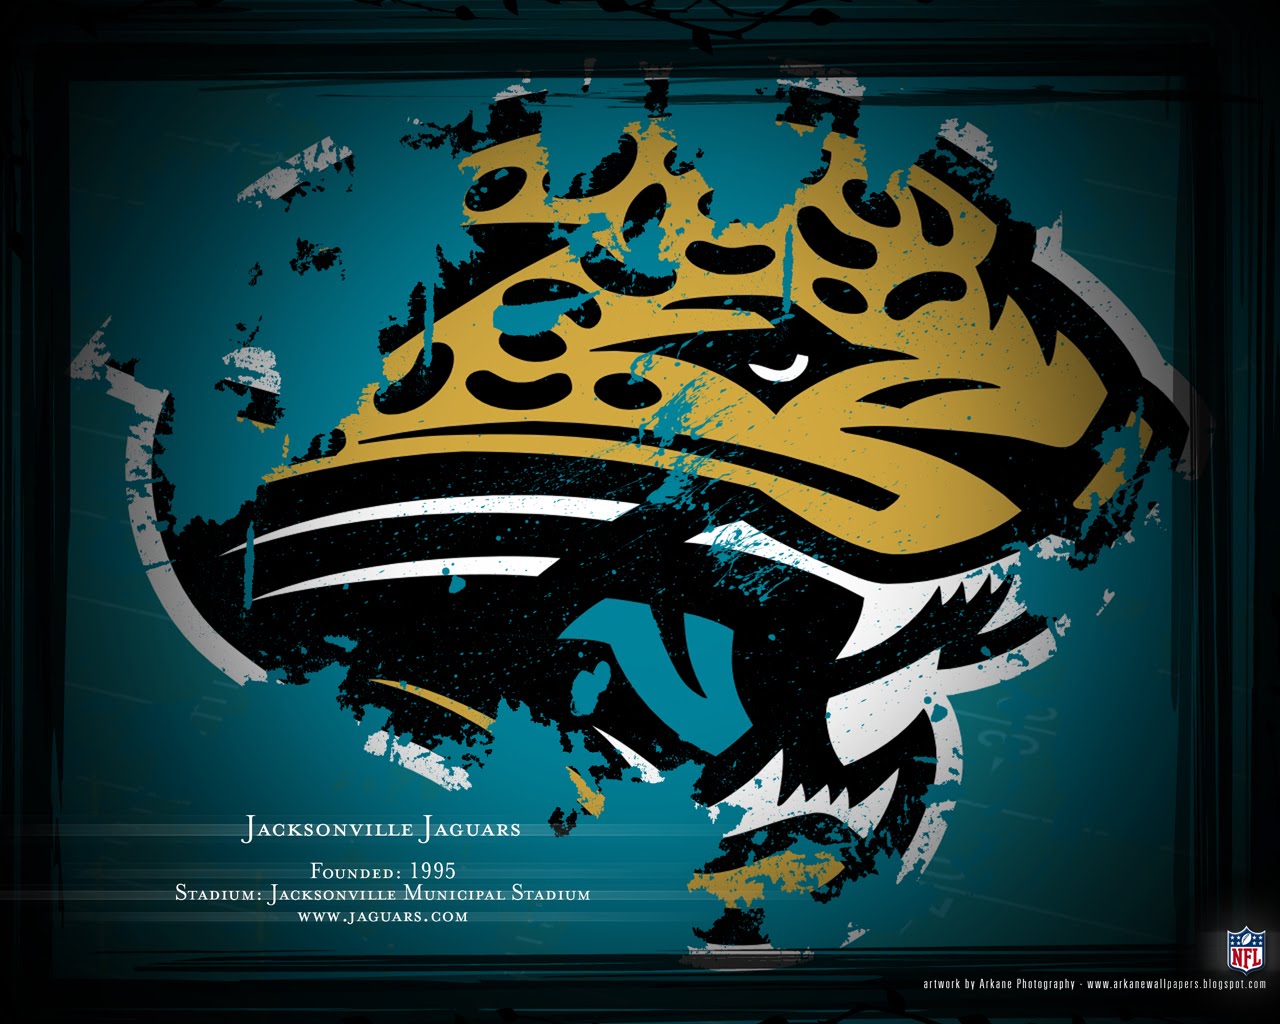 Melhores papéis de parede de Jacksonville Jaguars para tela do telefone